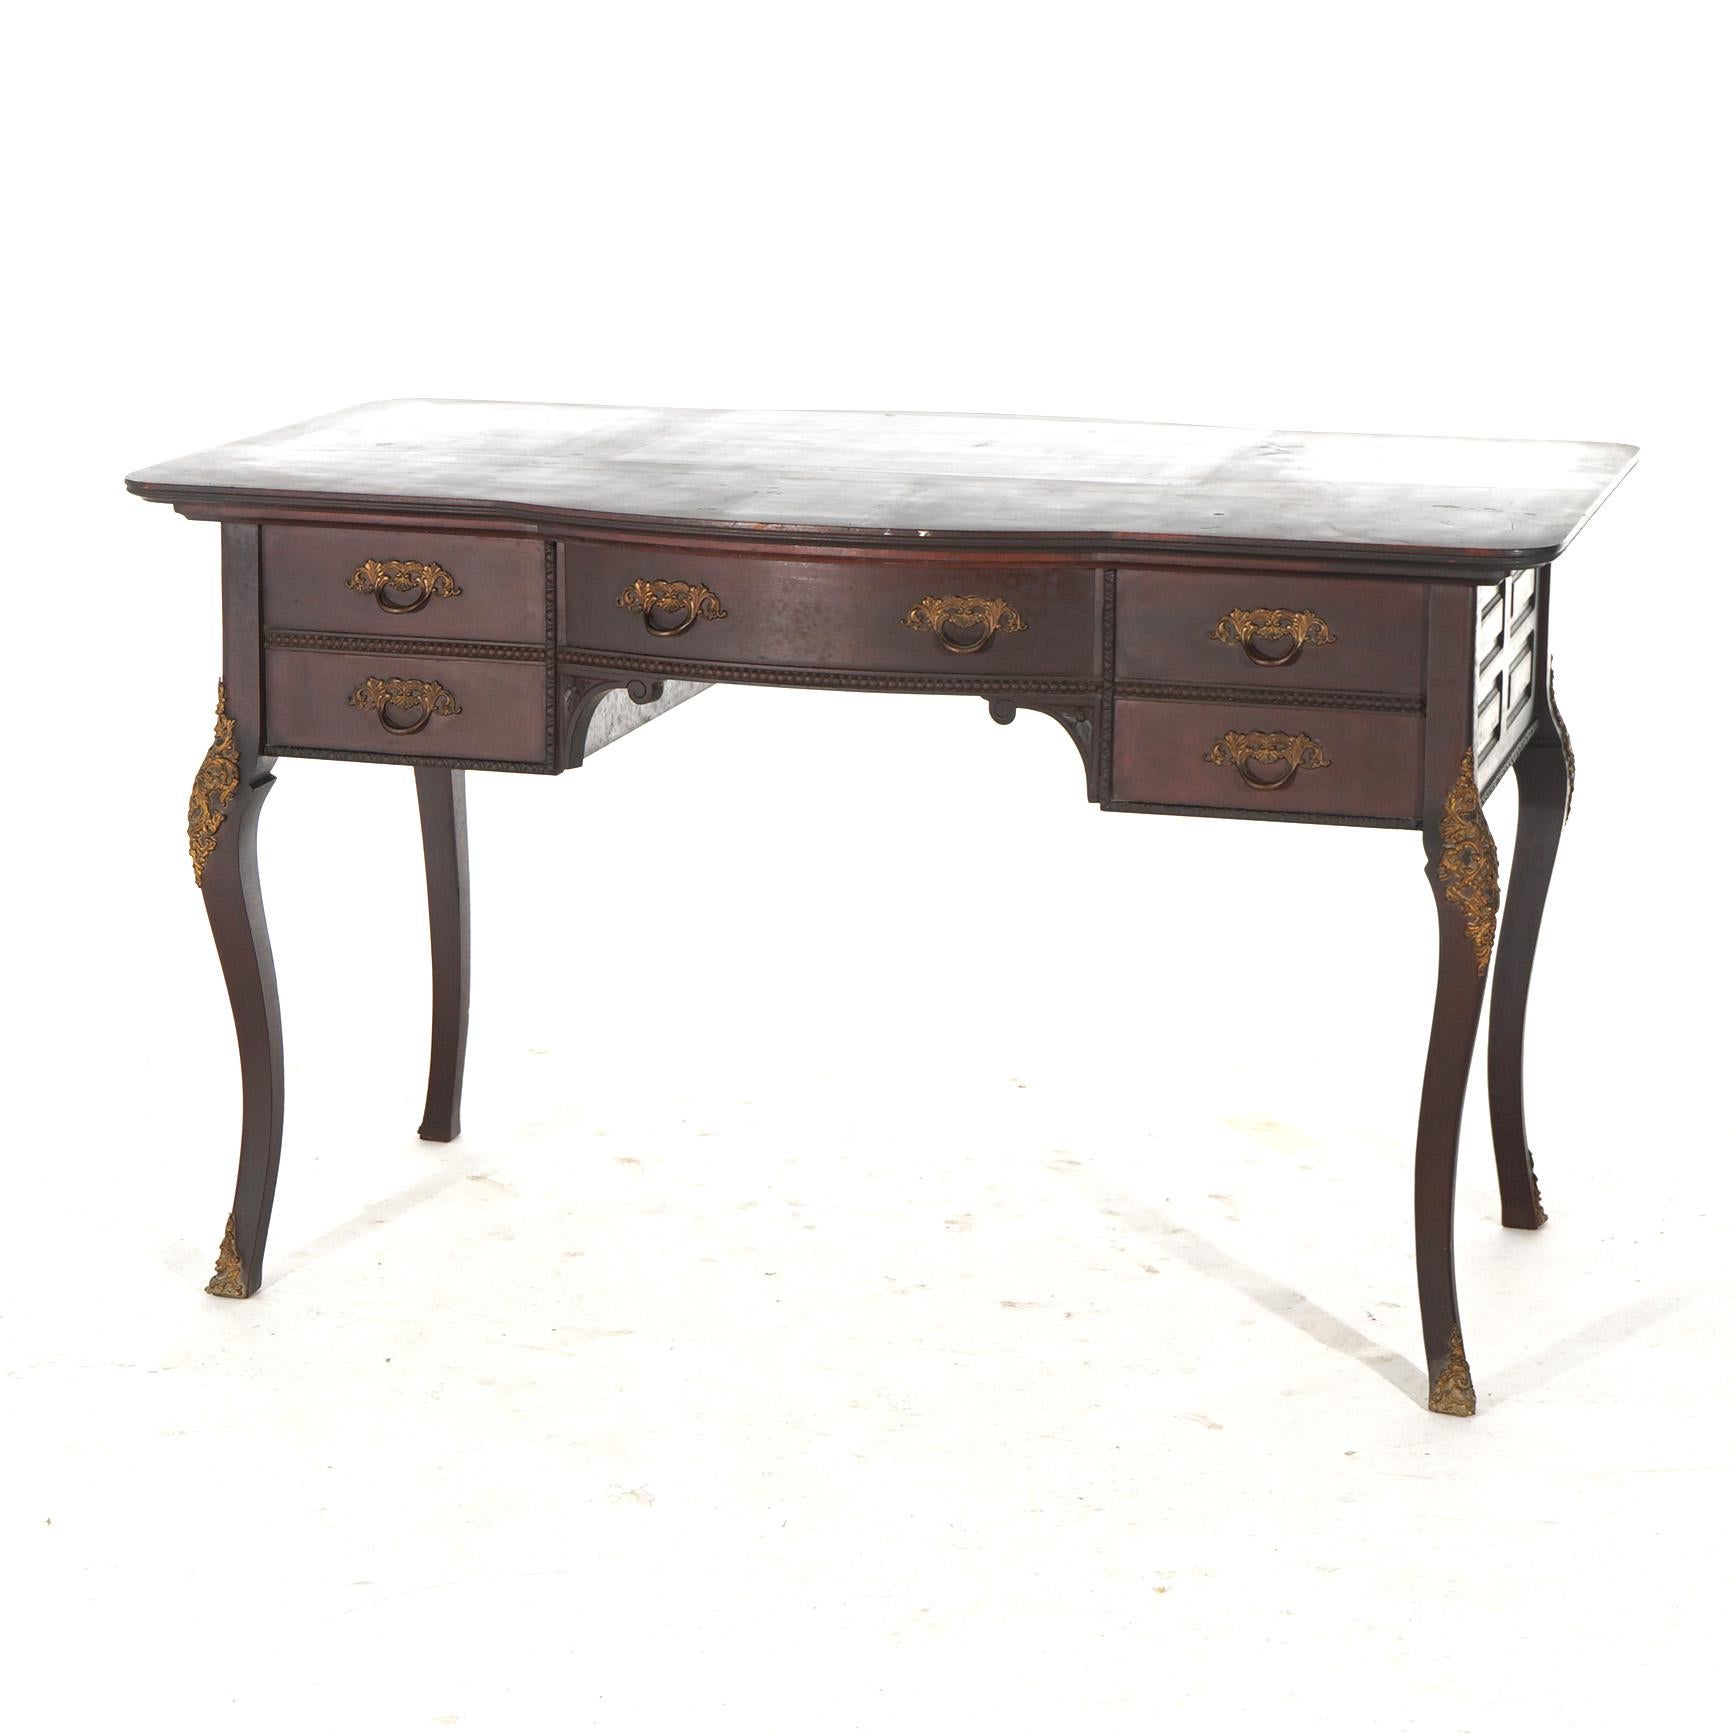 Antique French Mahogany & Ormolu Bureau Plat Writing Desk C1910 For Sale 12